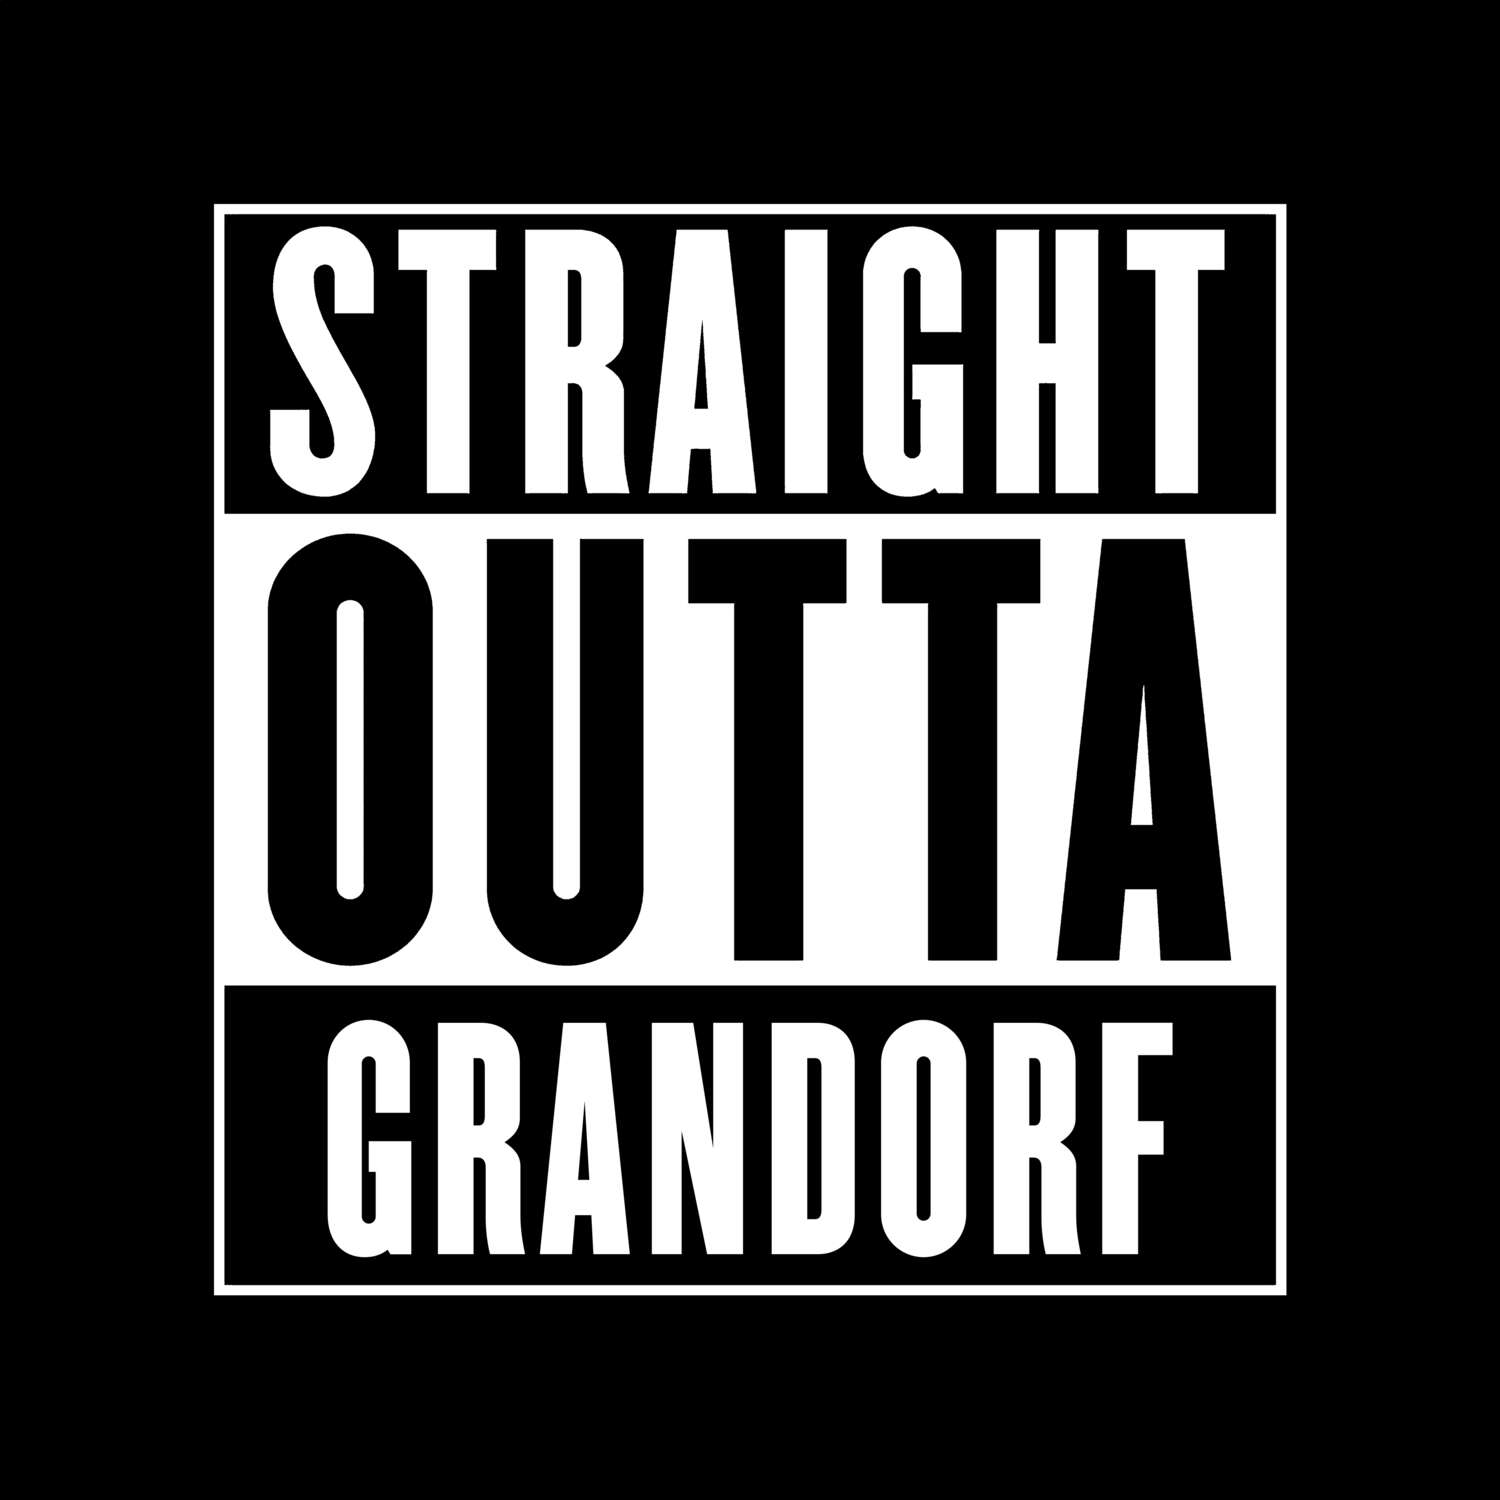 Grandorf T-Shirt »Straight Outta«